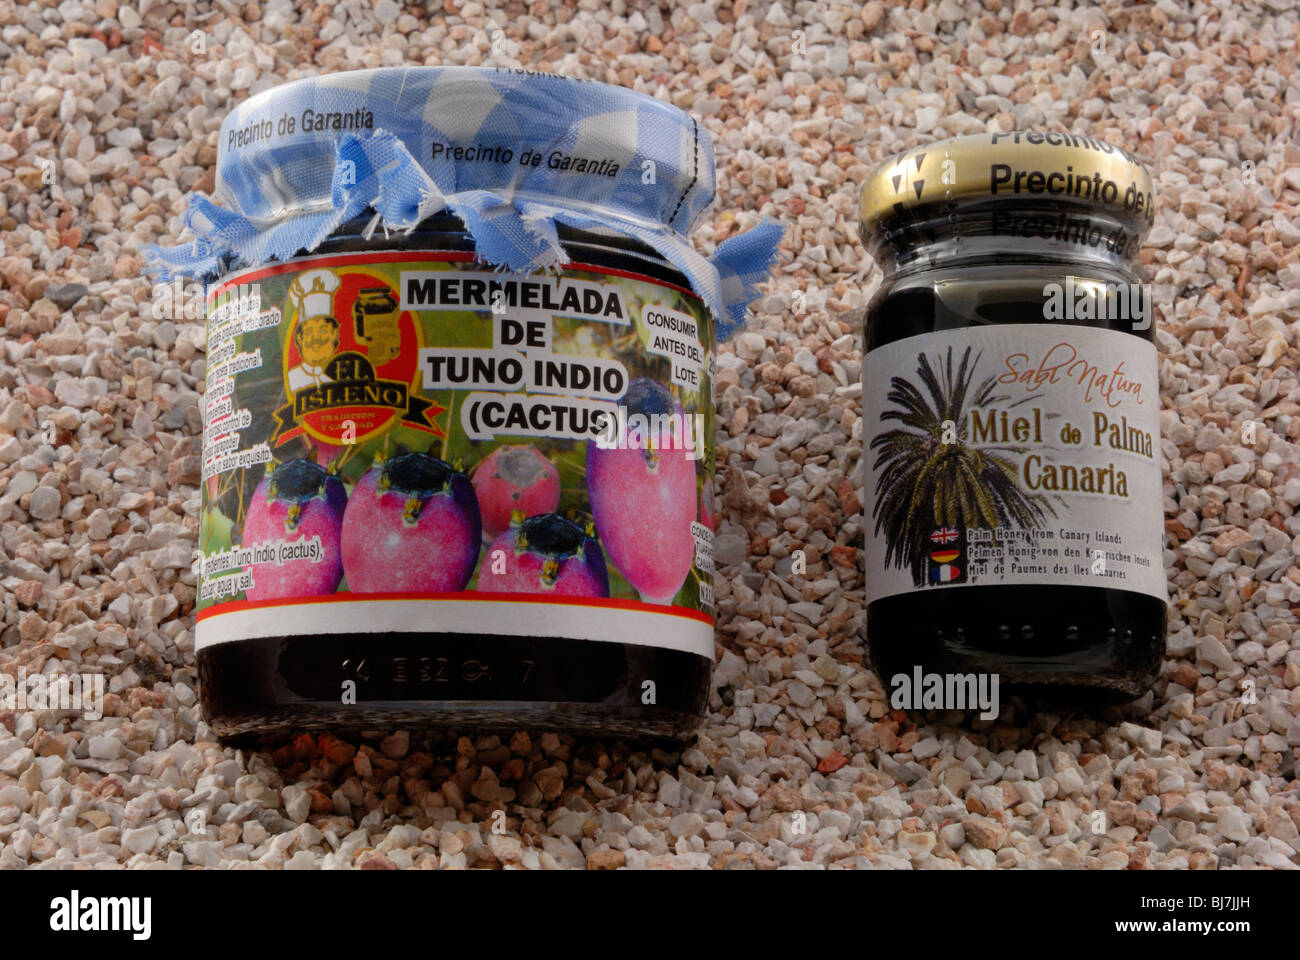 A jar of Marmelada de Tuno Indio, Cactus Marmalade and a jar of Miel de Palma Canaria, Palm Honey from Canary Islands, Barranco Stock Photo